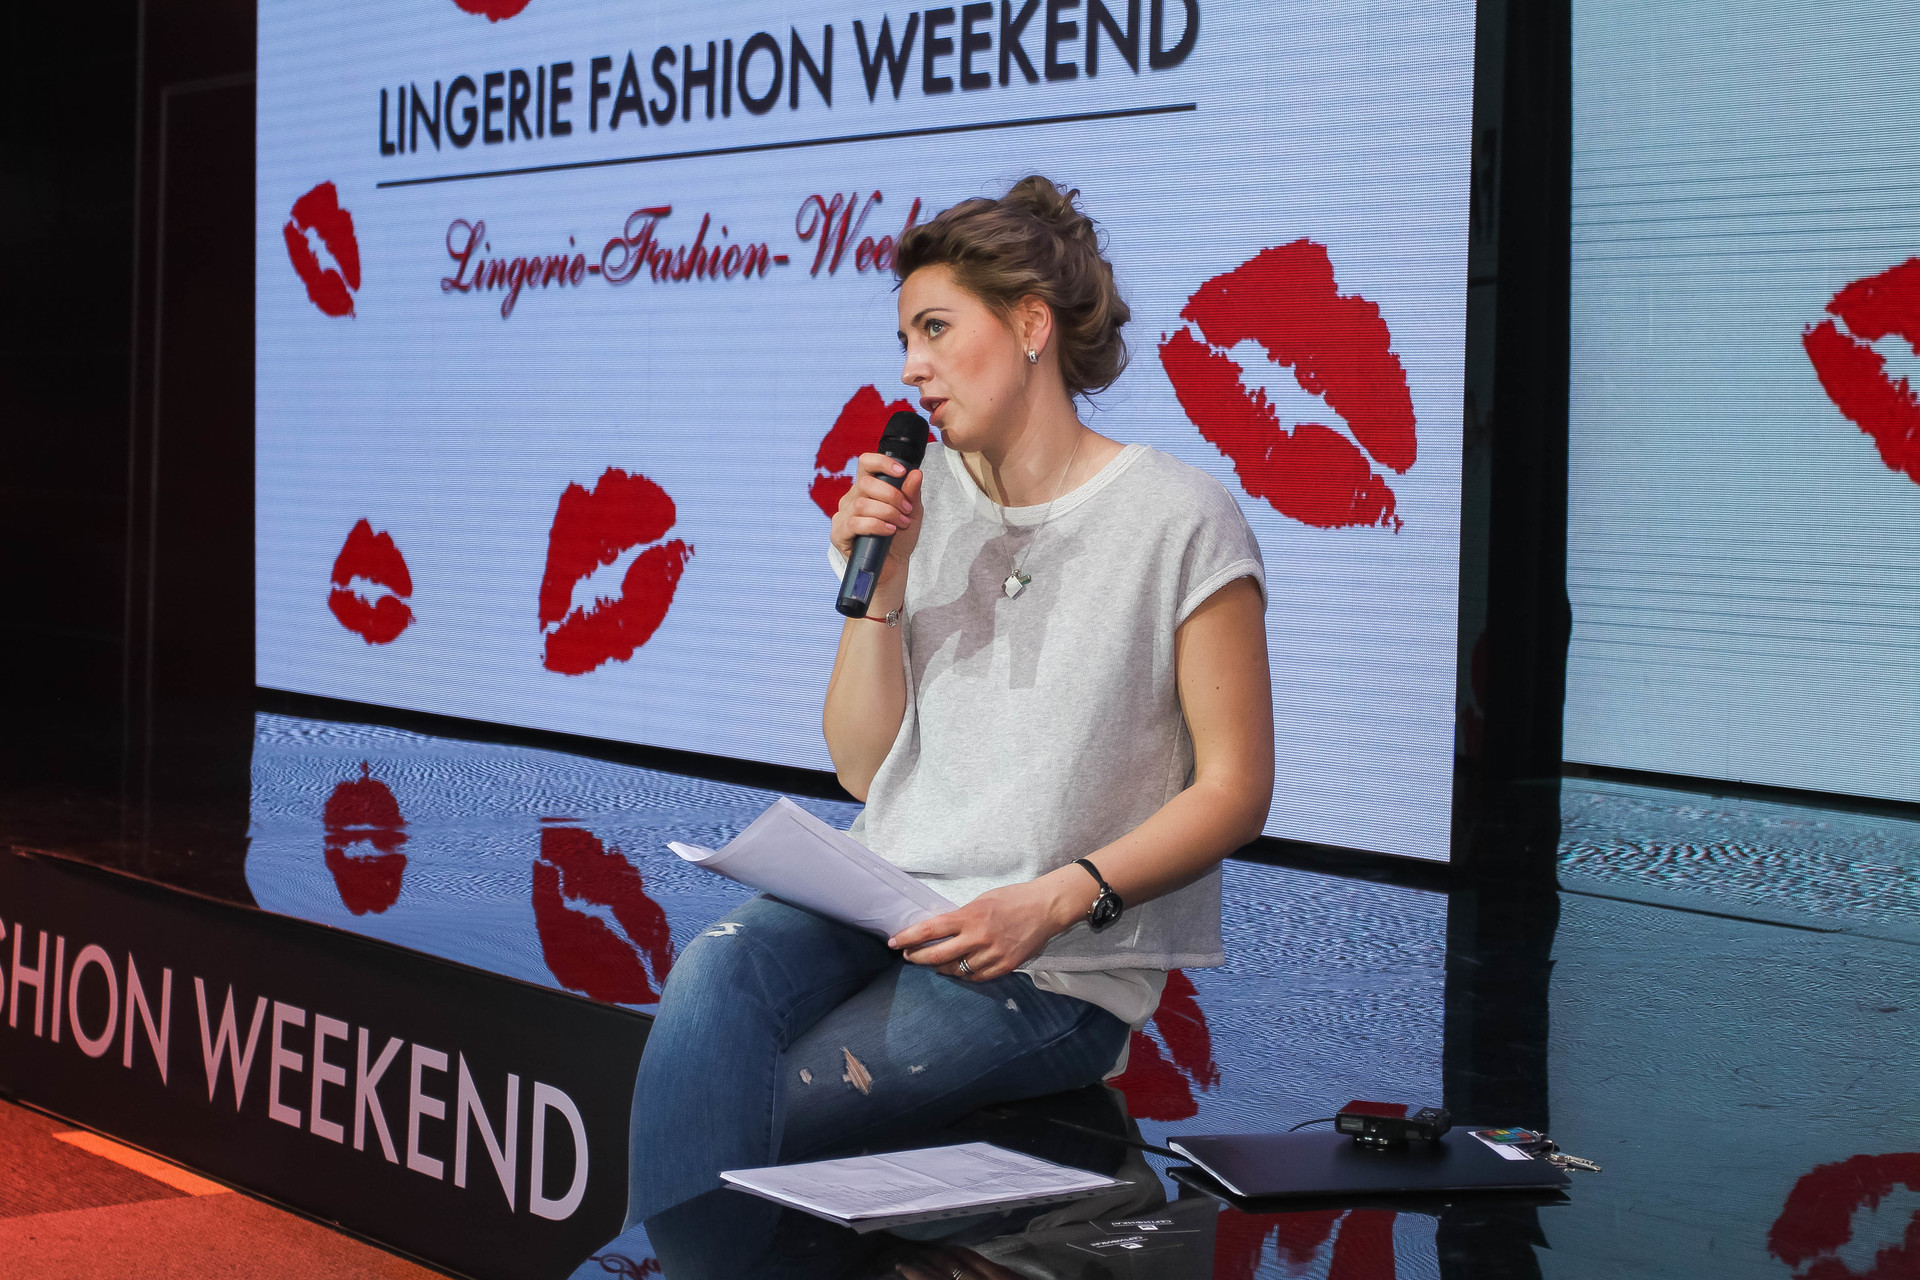 Lingerie Fashion Weekend 2015